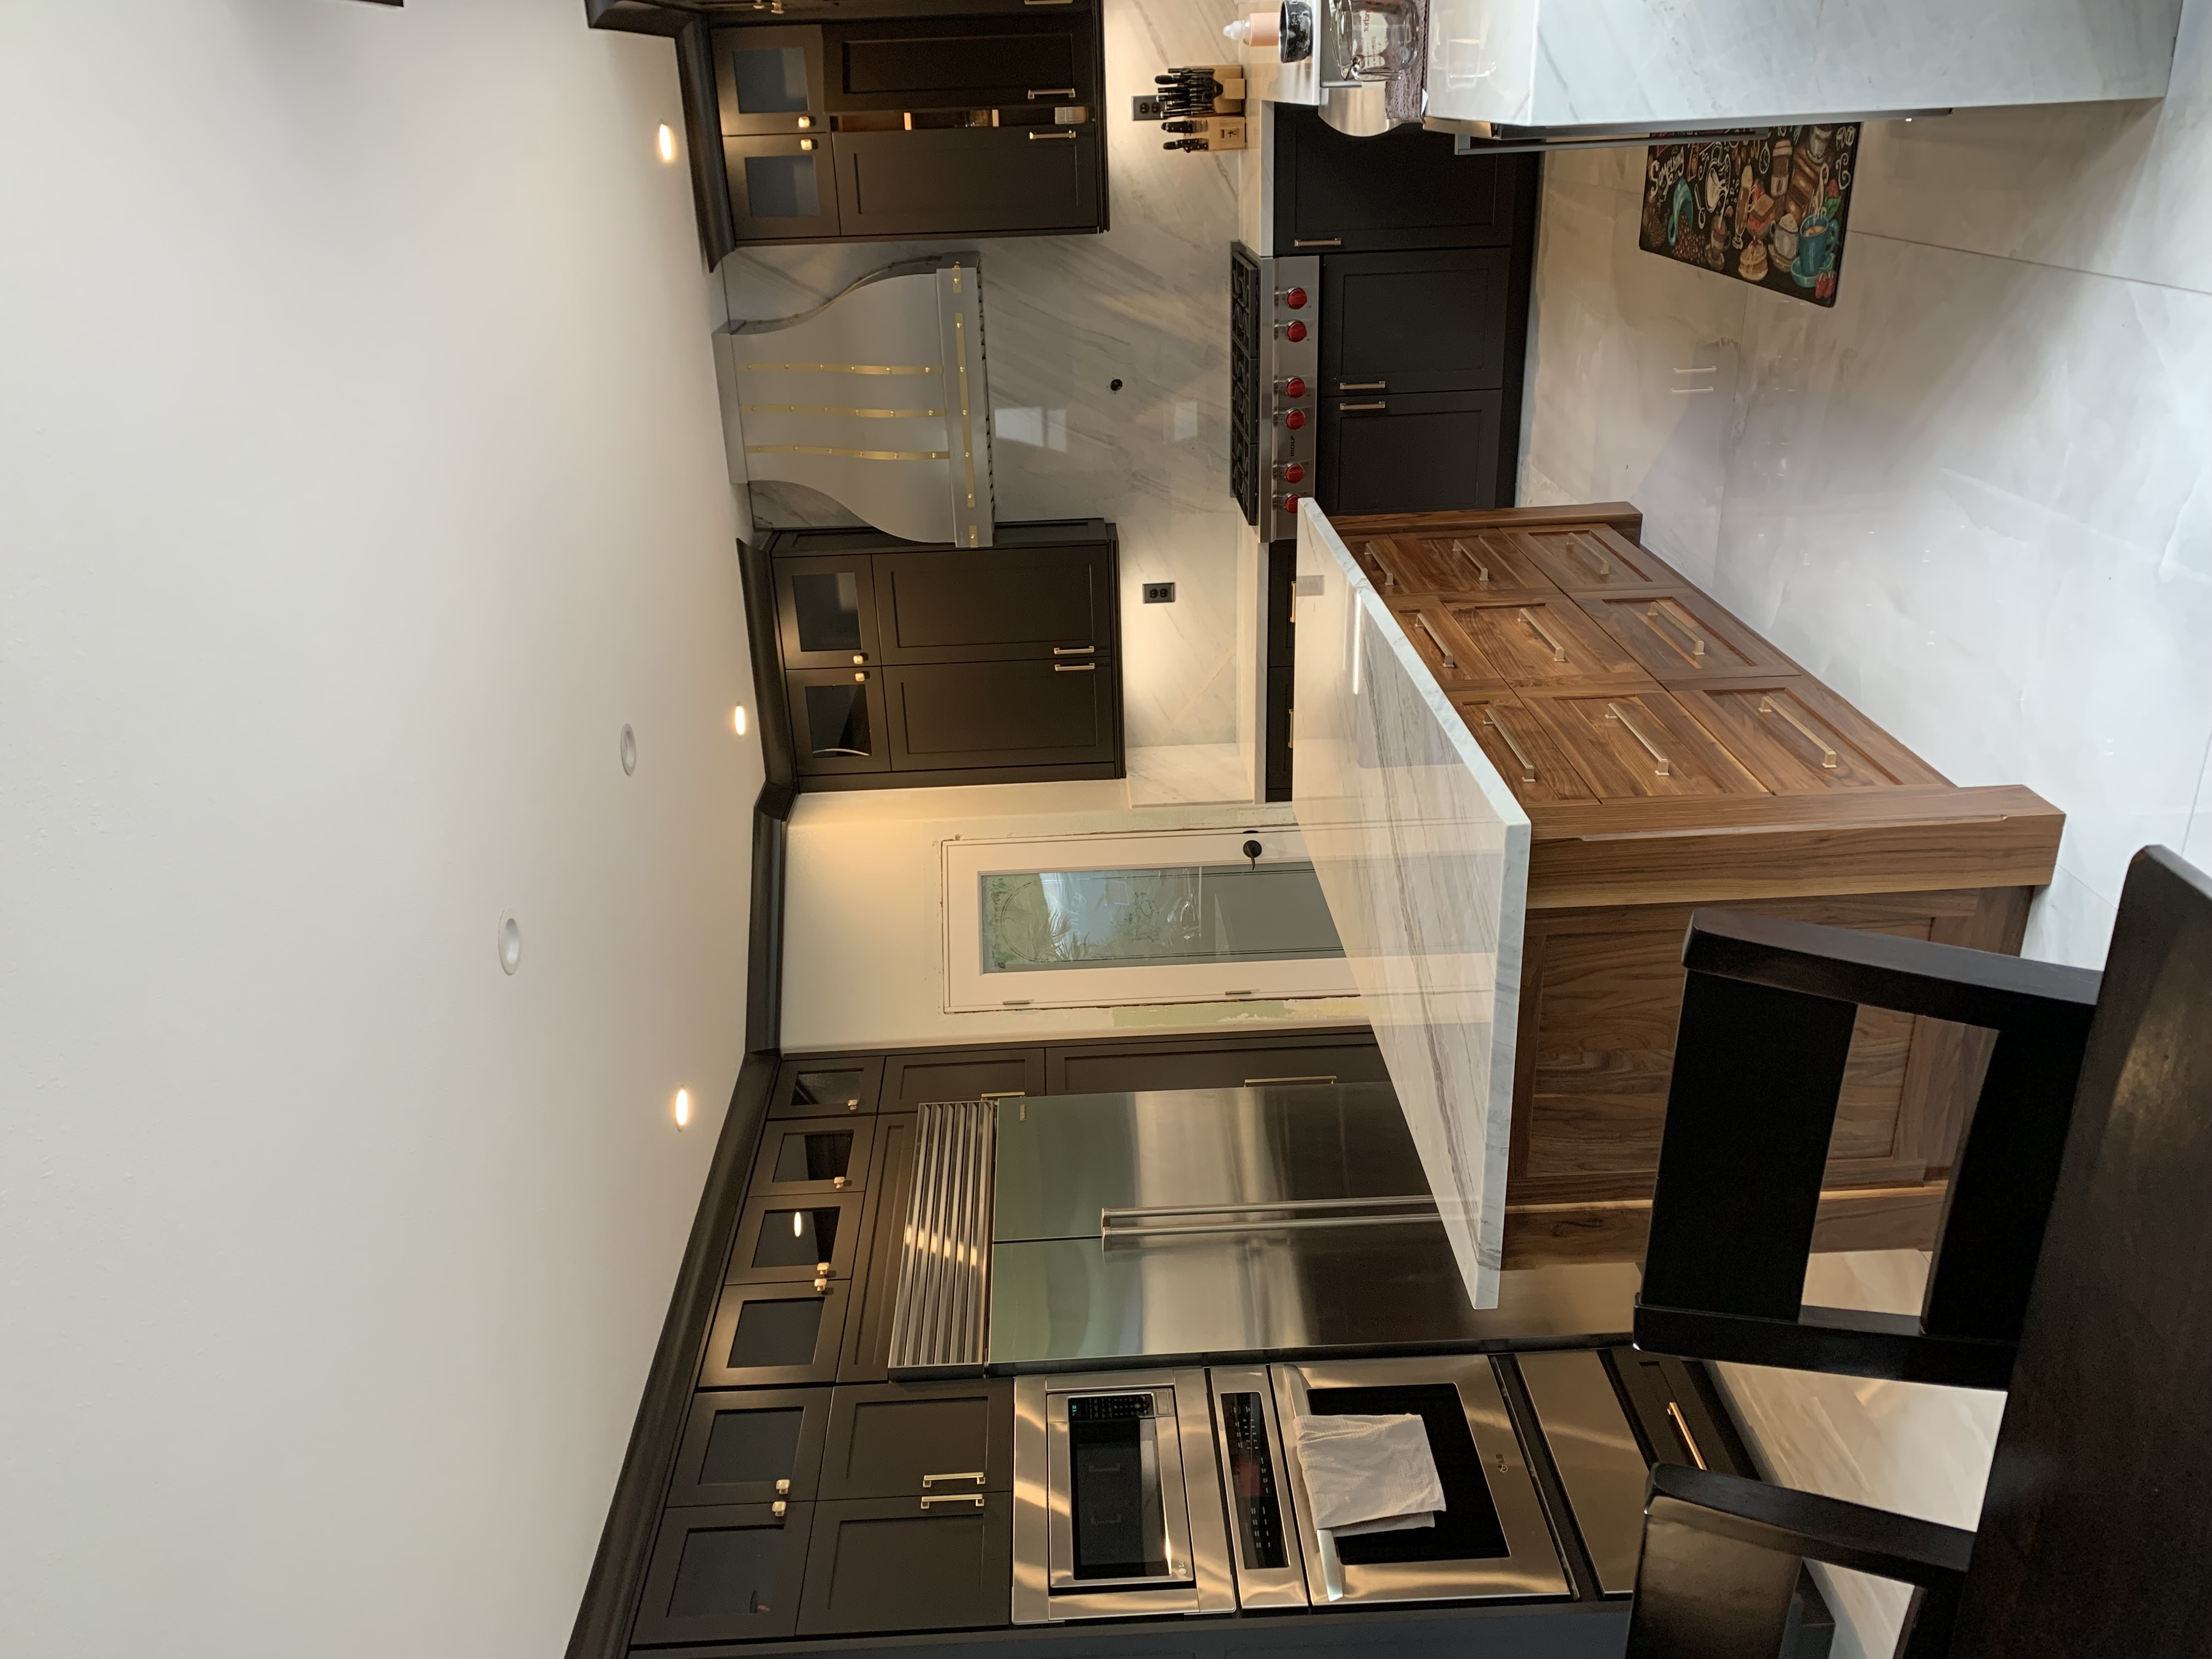 Creative kitchen design idea with various range hood options,french kitchen design,brown kitchen cabinets, pristine white kitchen countertops,marble backsplash